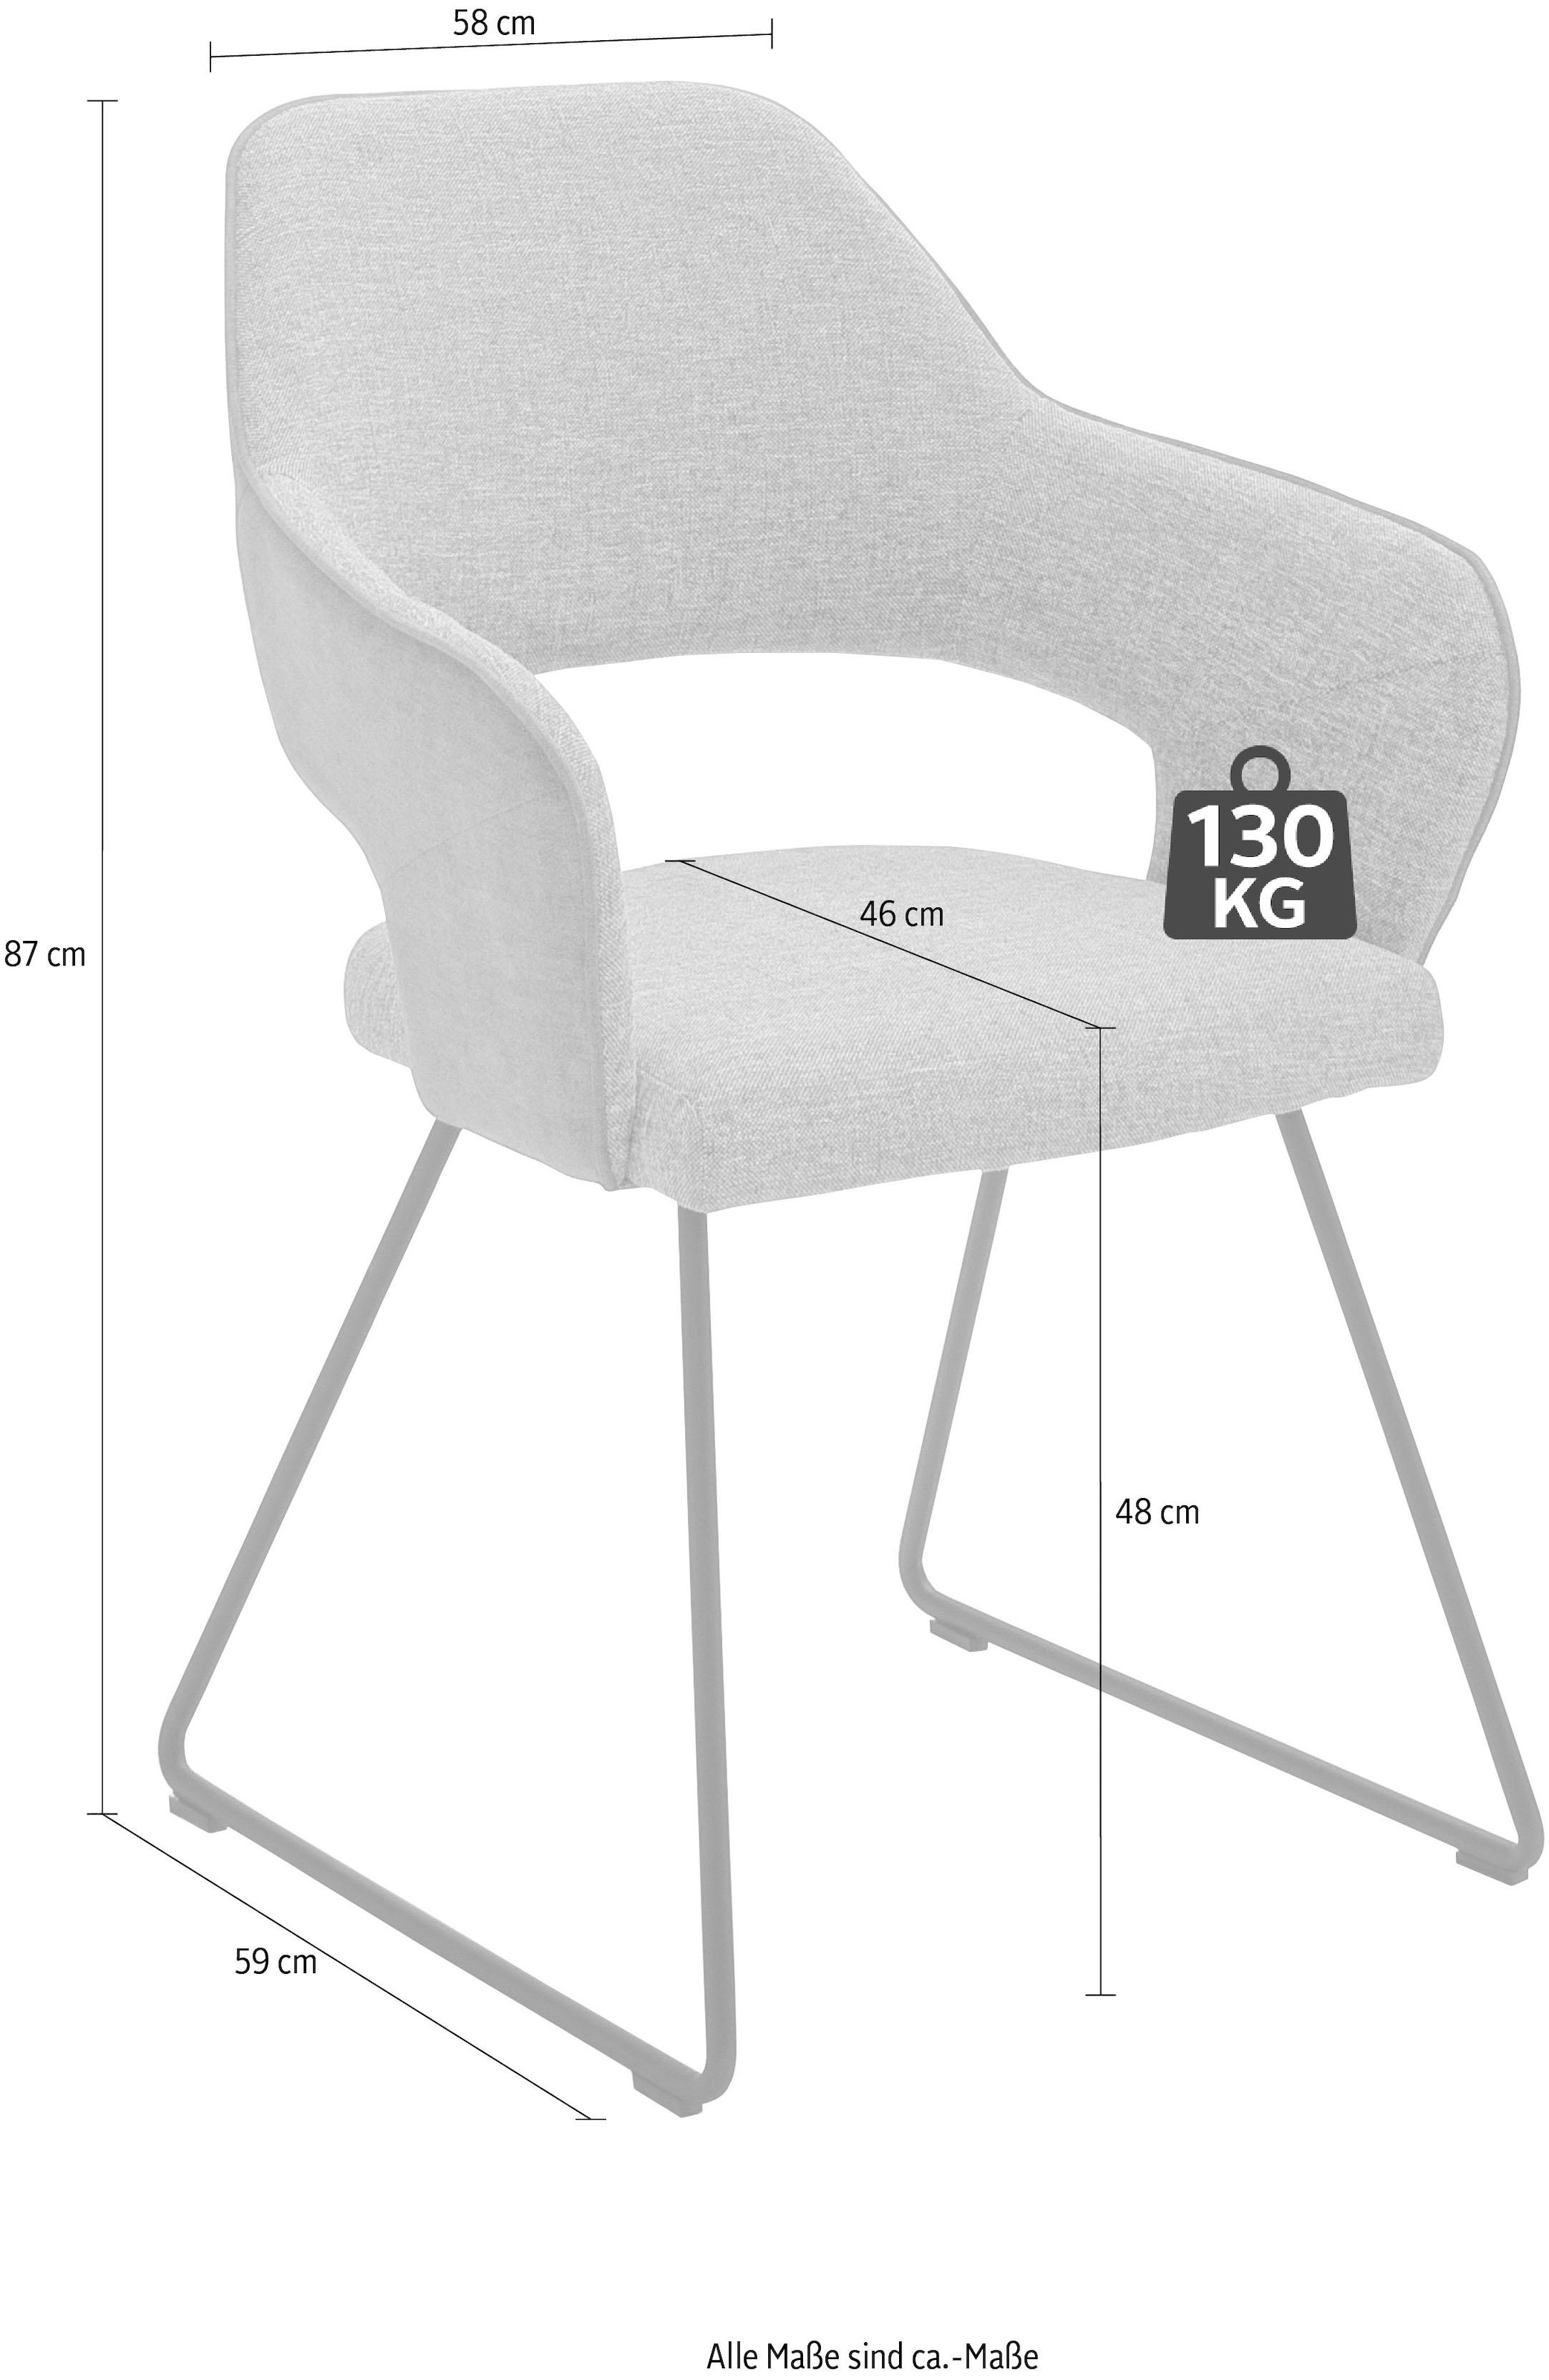 MCA bequem kaufen furniture 2er-Set, Kg »NEWCASTEL«, Stuhl Stuhl bis 130 belastbar